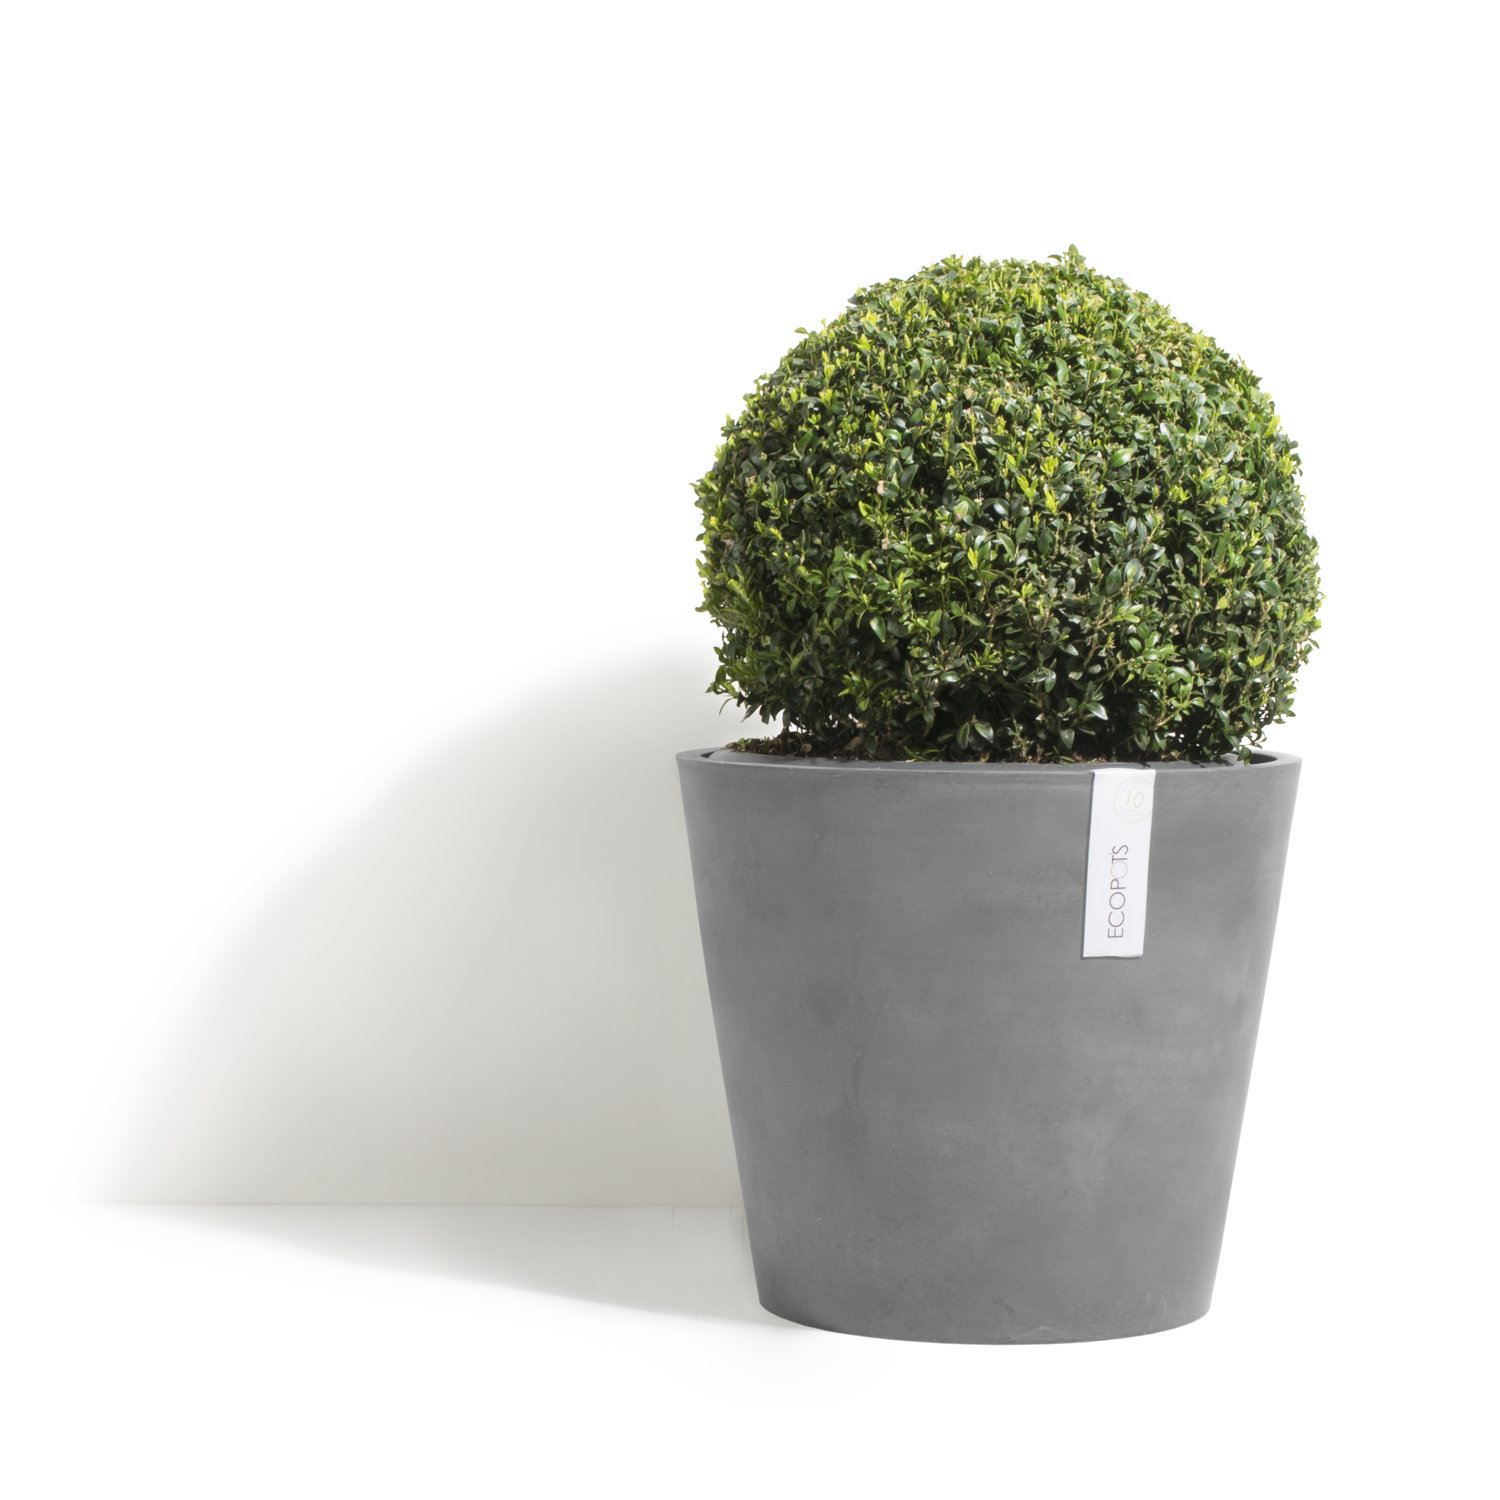 ECOPOTS Amsterdam Round Flower Pot | Sustainable